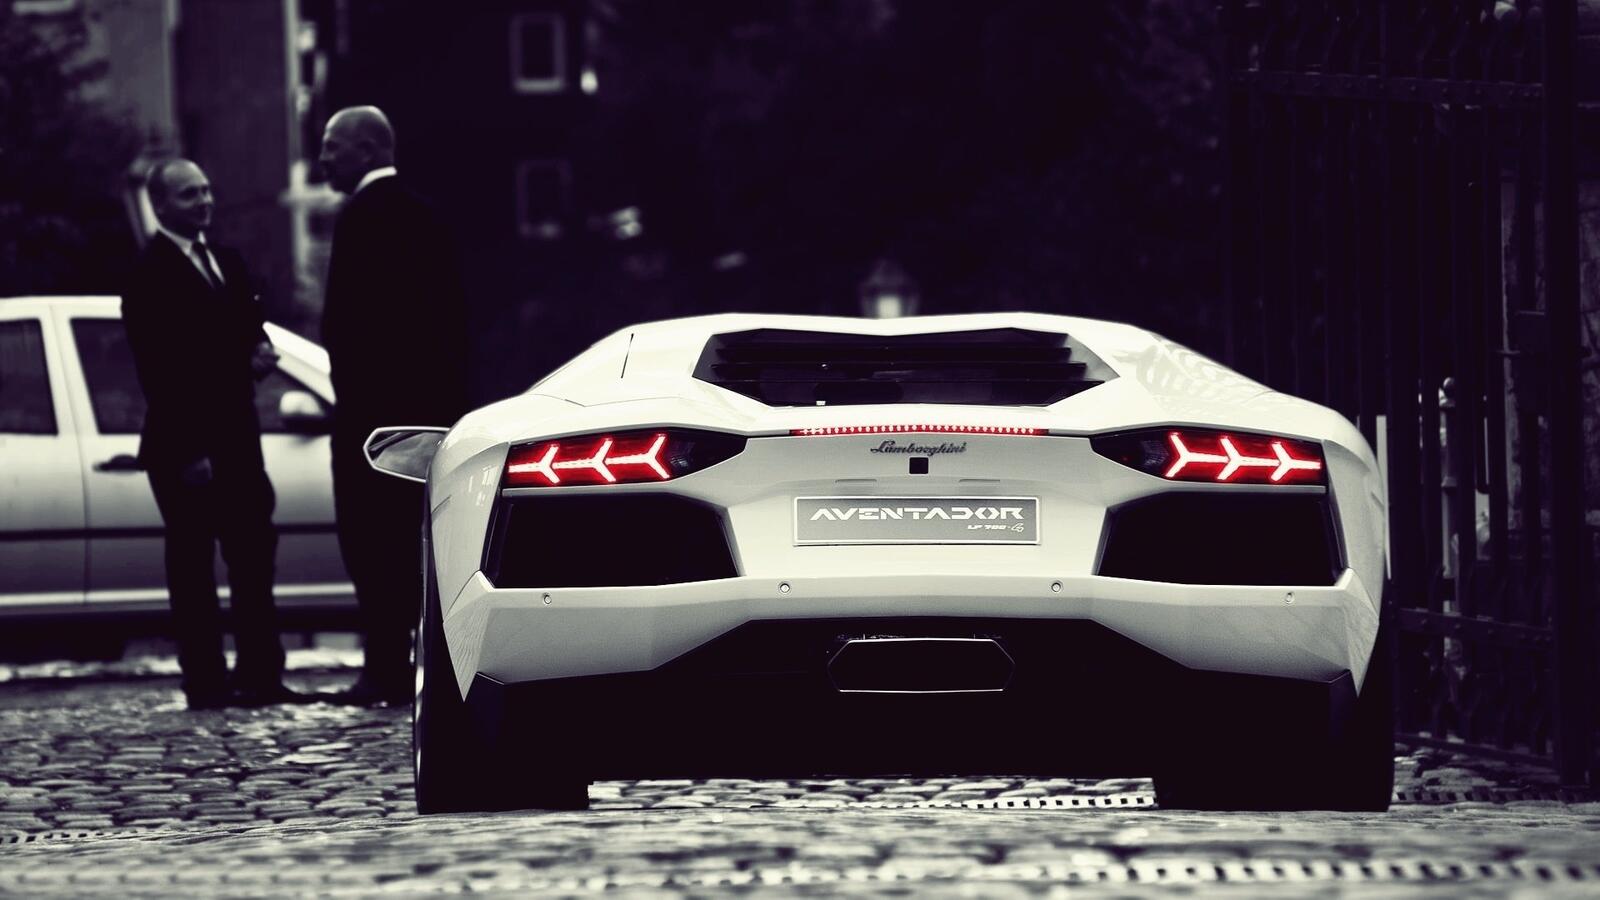 Free photo White Lamborghini Aventador from behind in monochrome photo